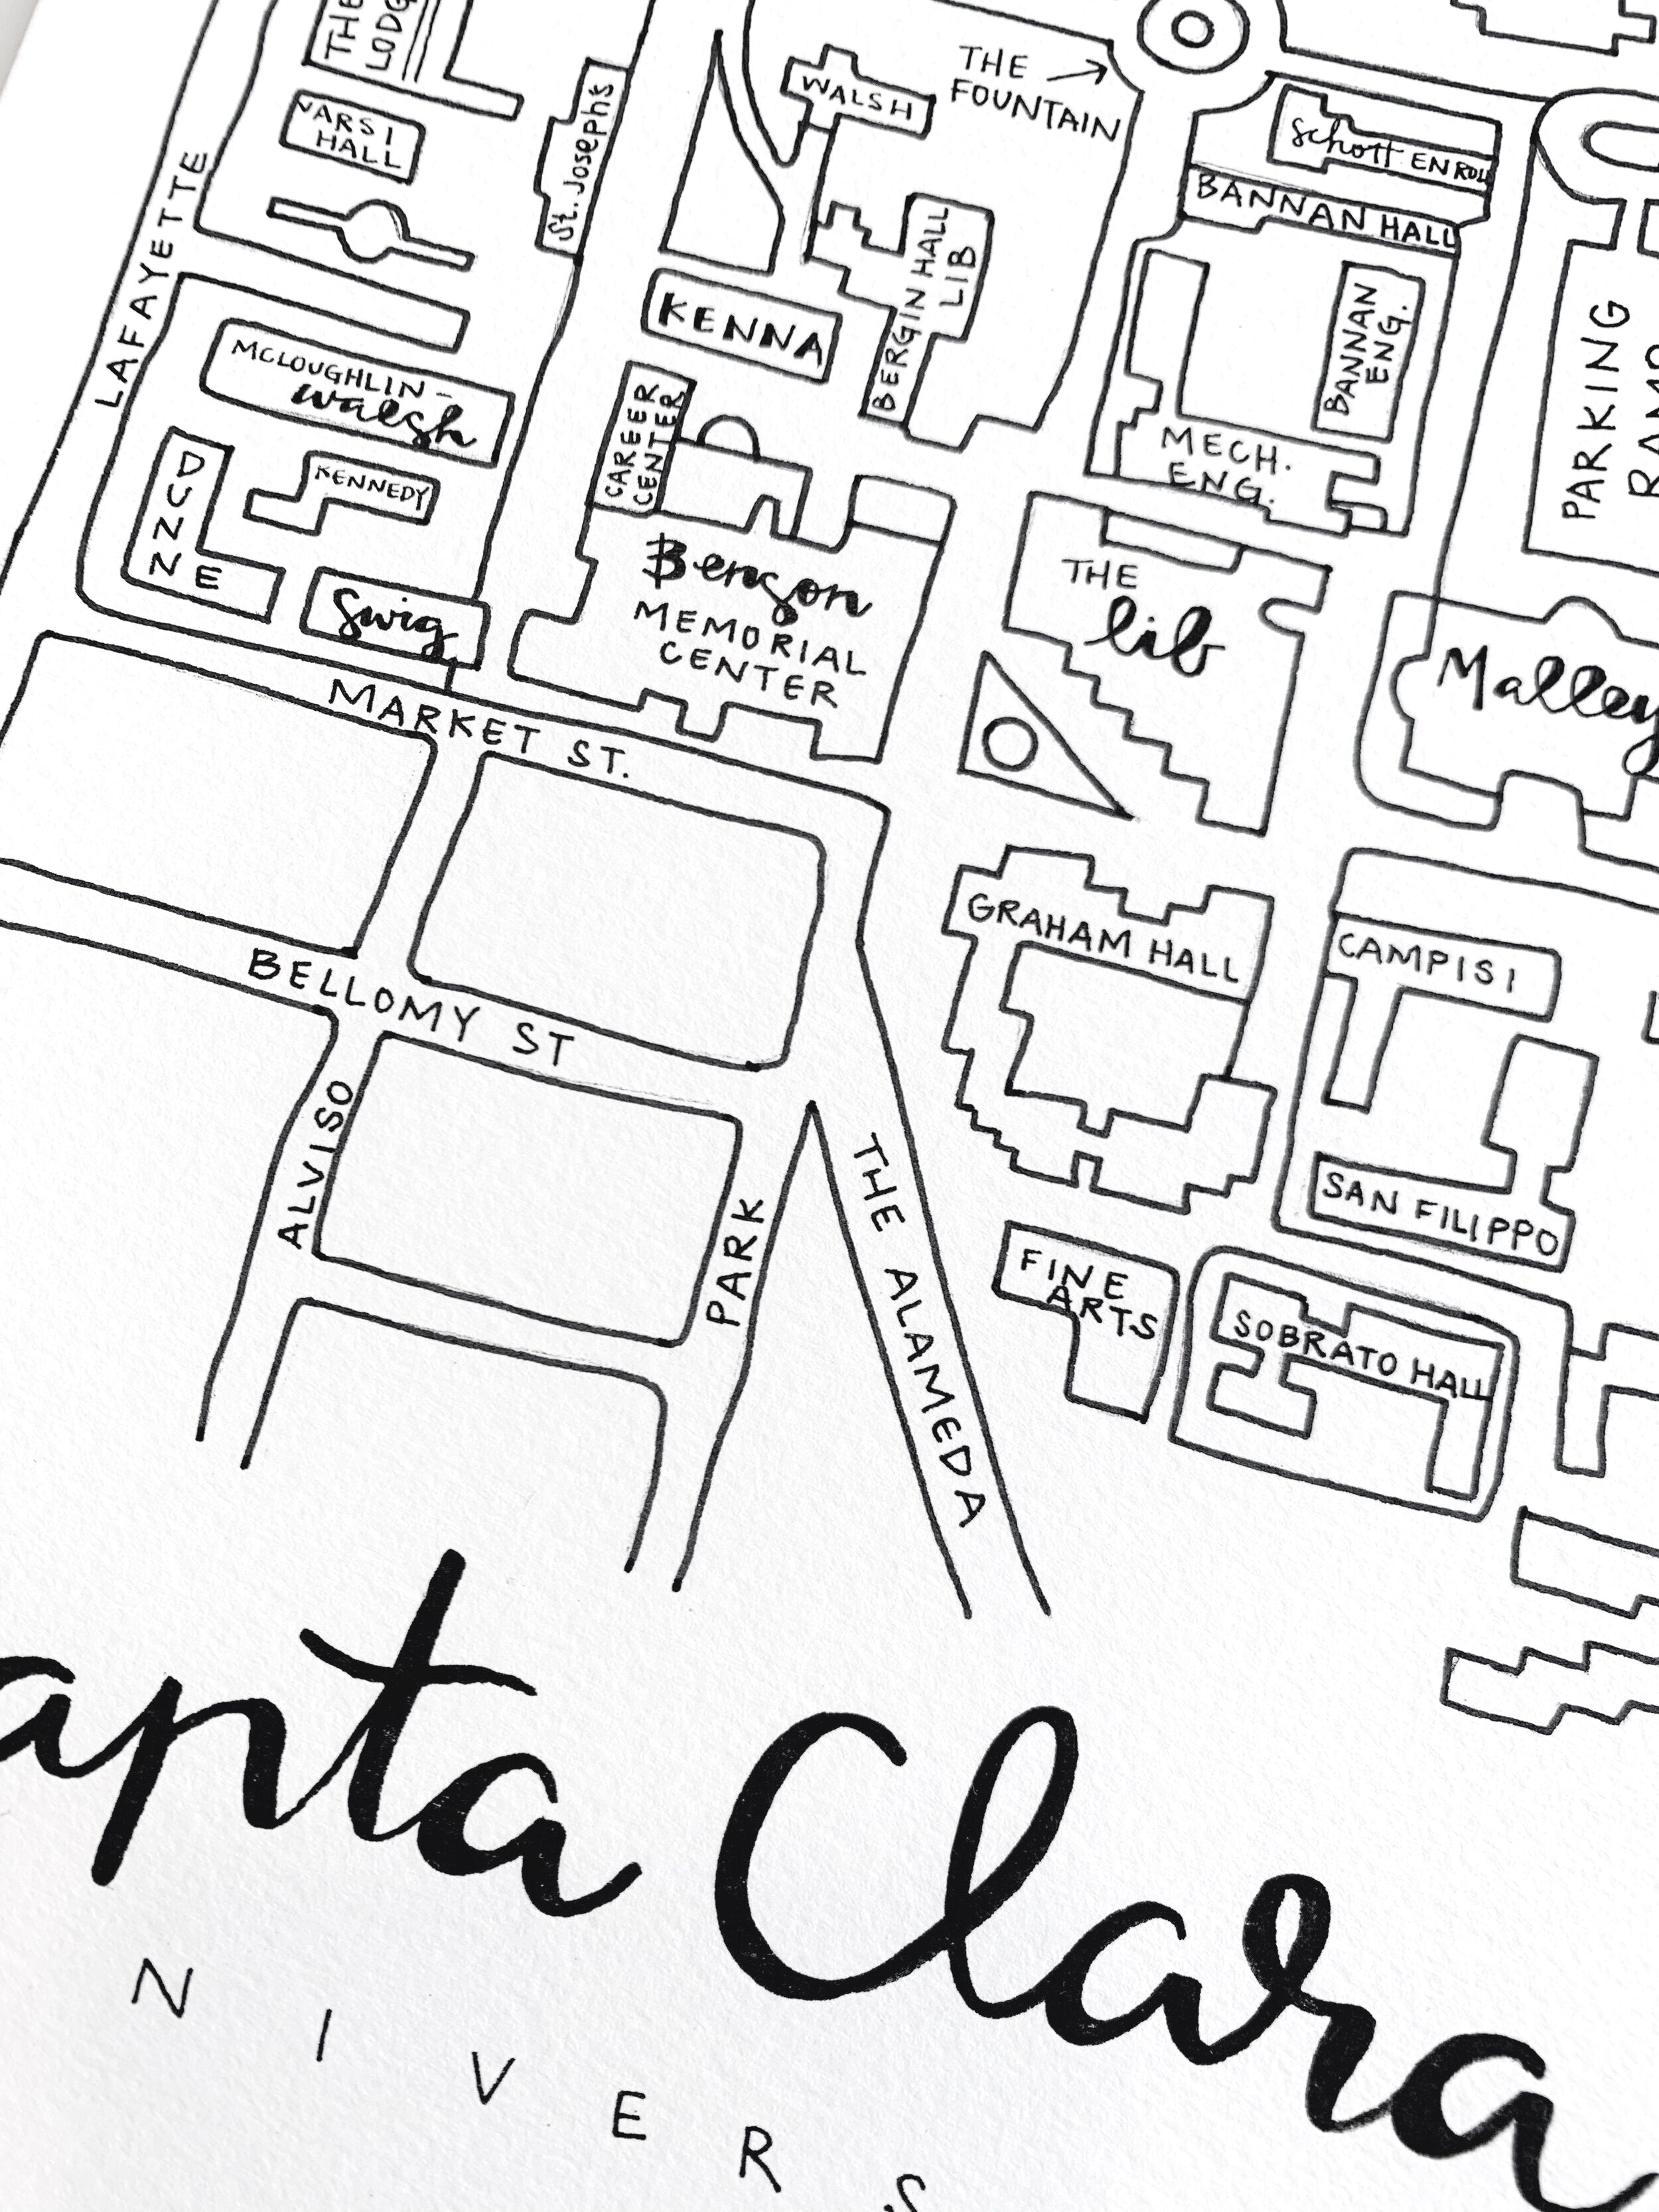 santa-clara-university-campus-map-print-pre-2020-by-aleisha